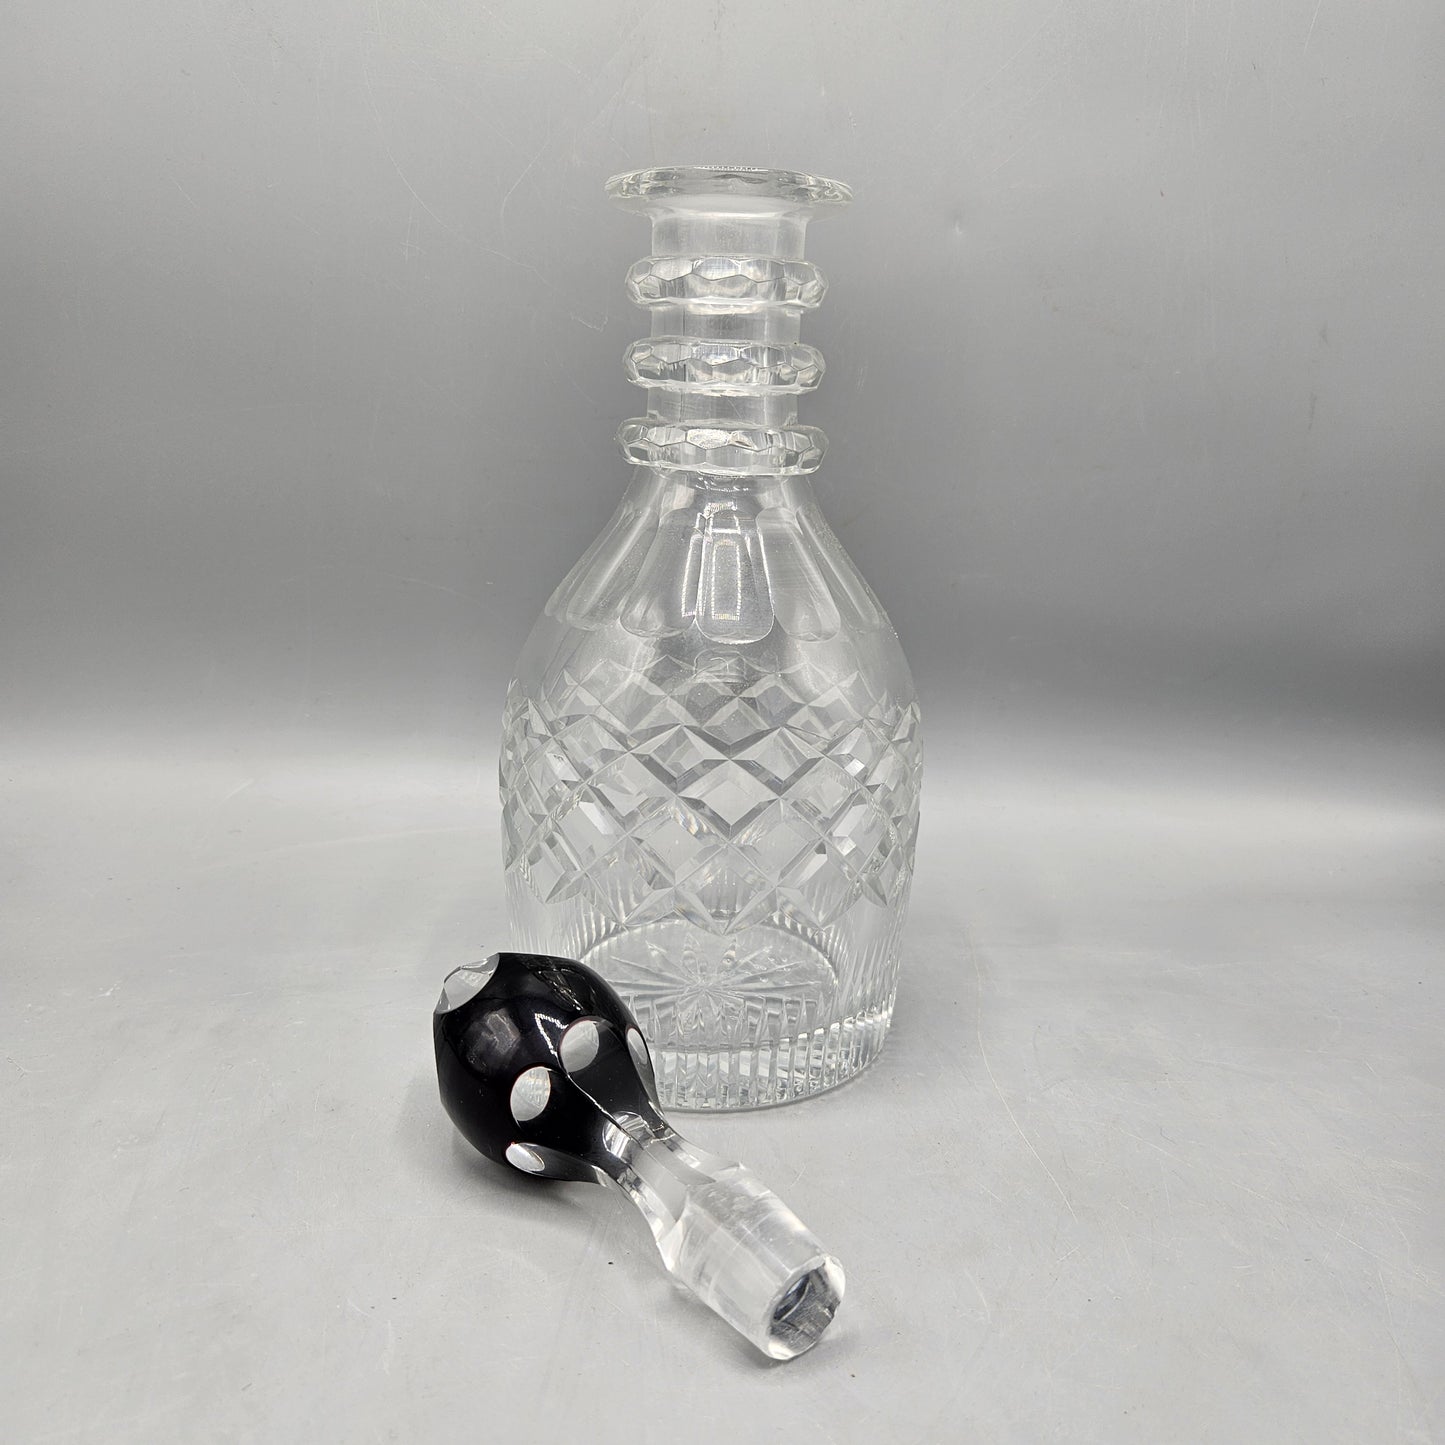 Vintage Crystal Decanter with Black Stopper